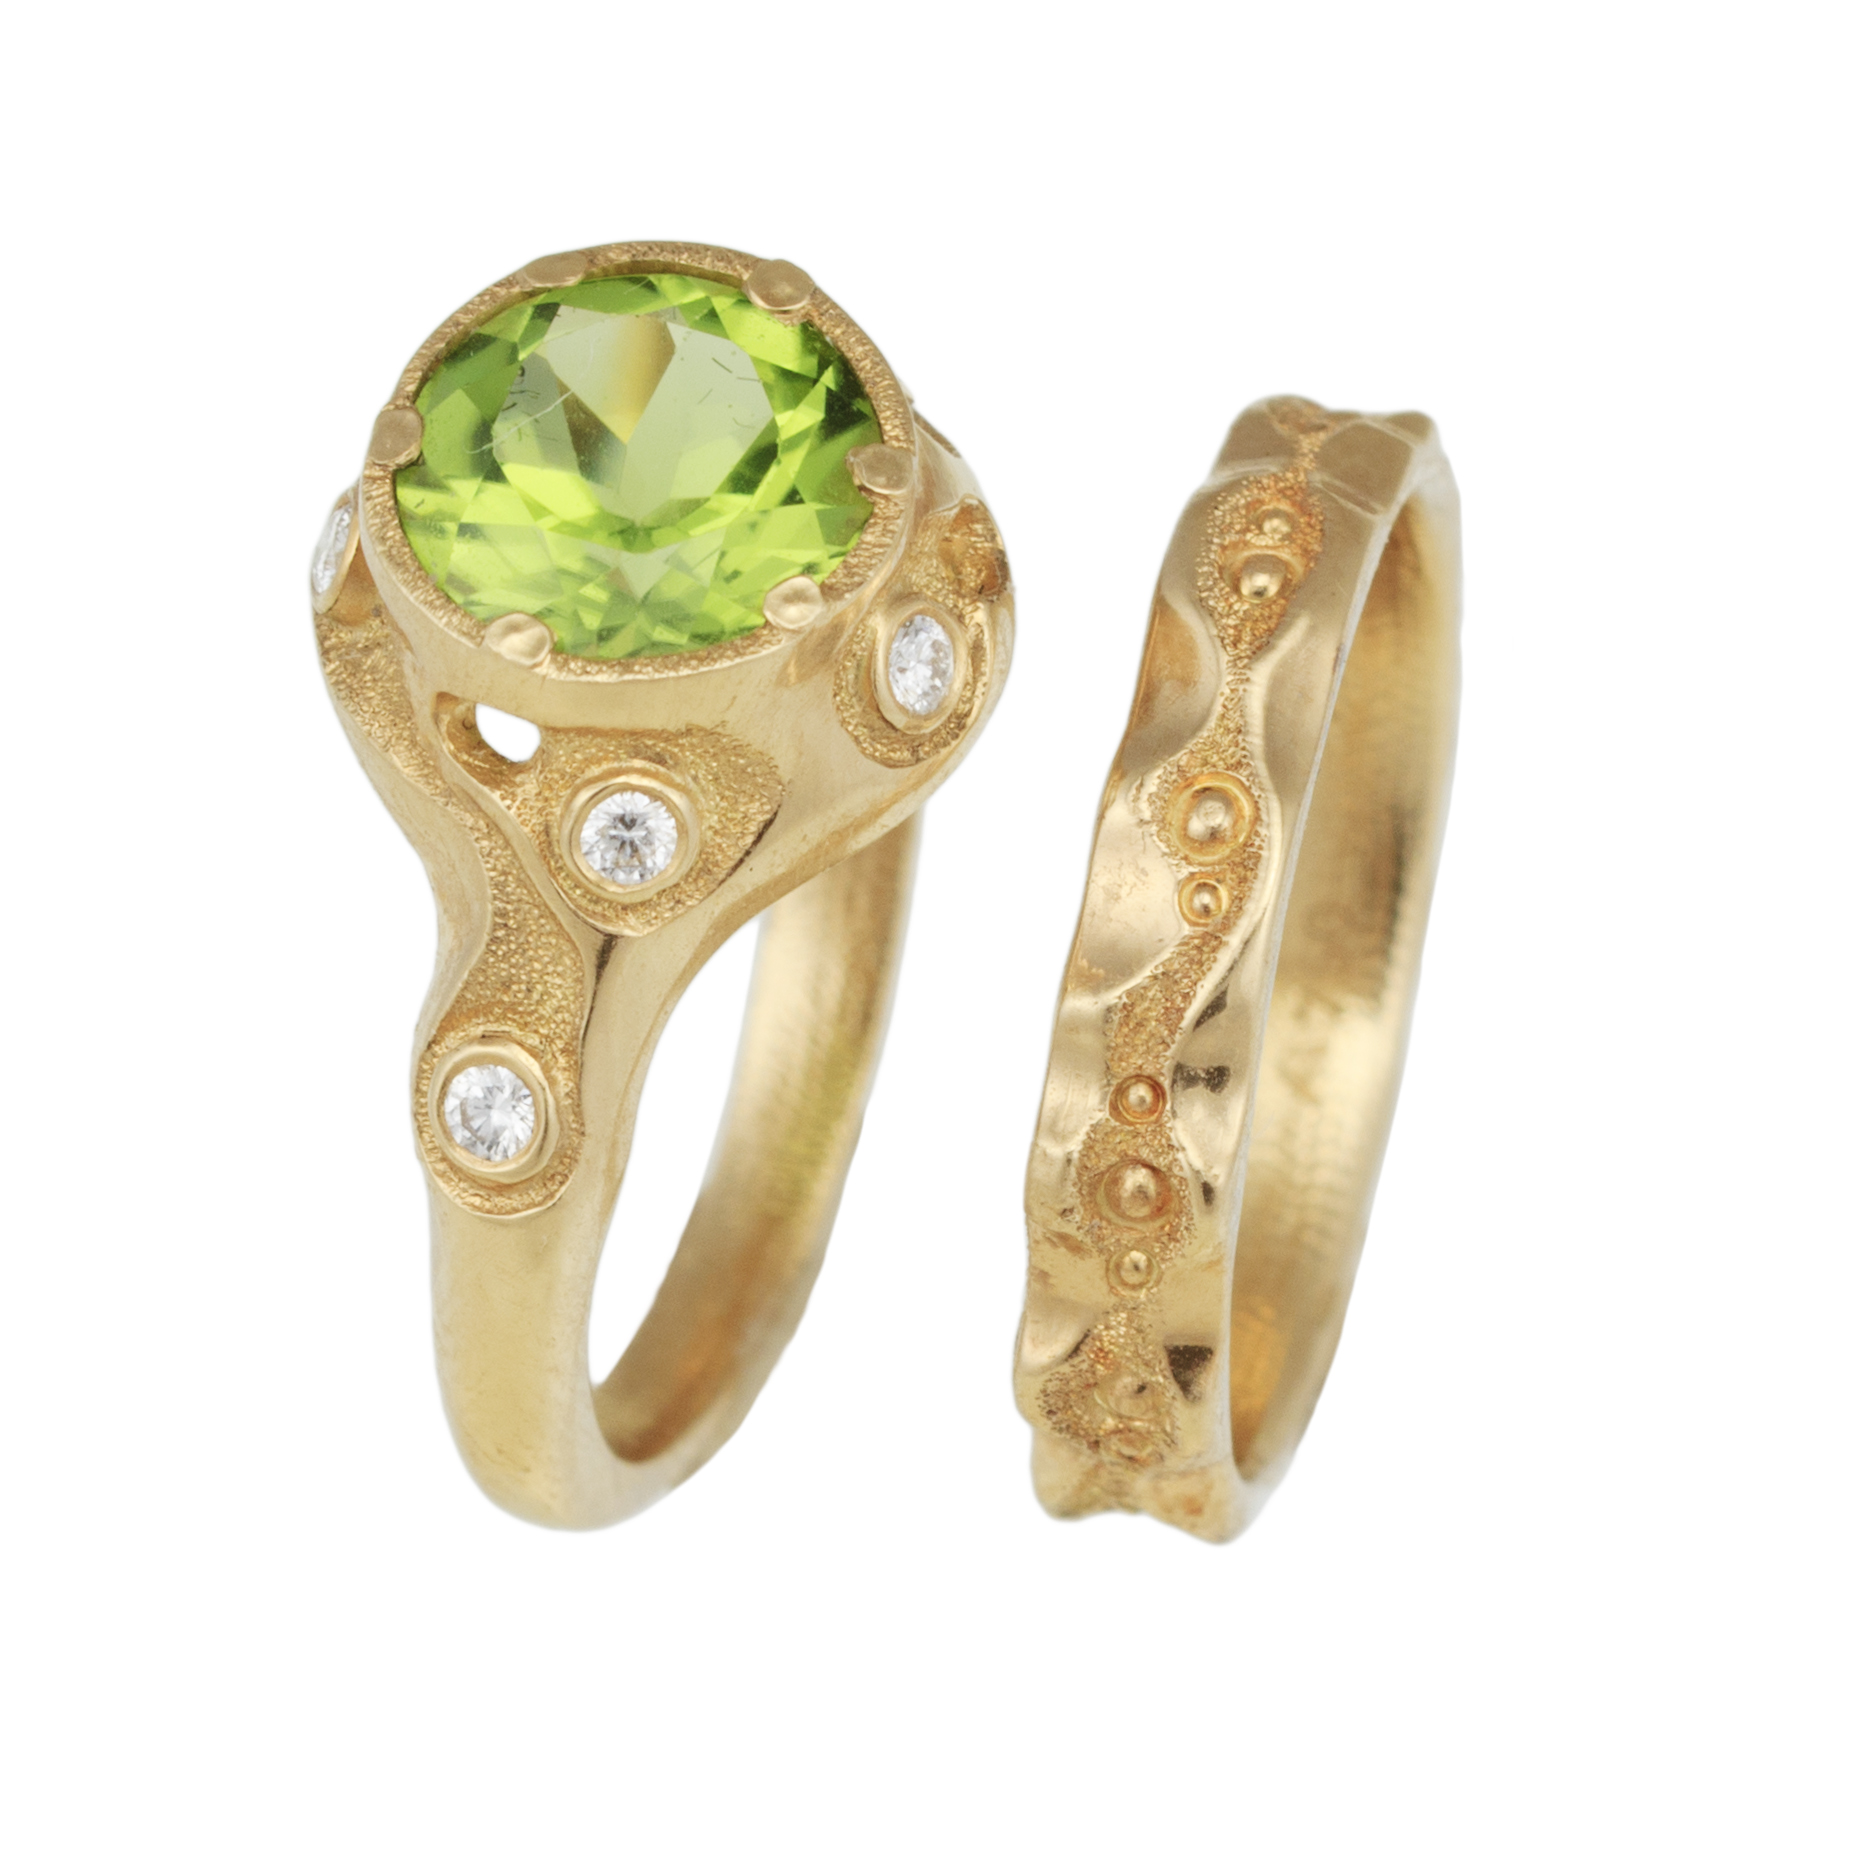 Swirling Brook Bridal Ring Set by Audrius Krulis. 18K Yellow Gold and Peridot